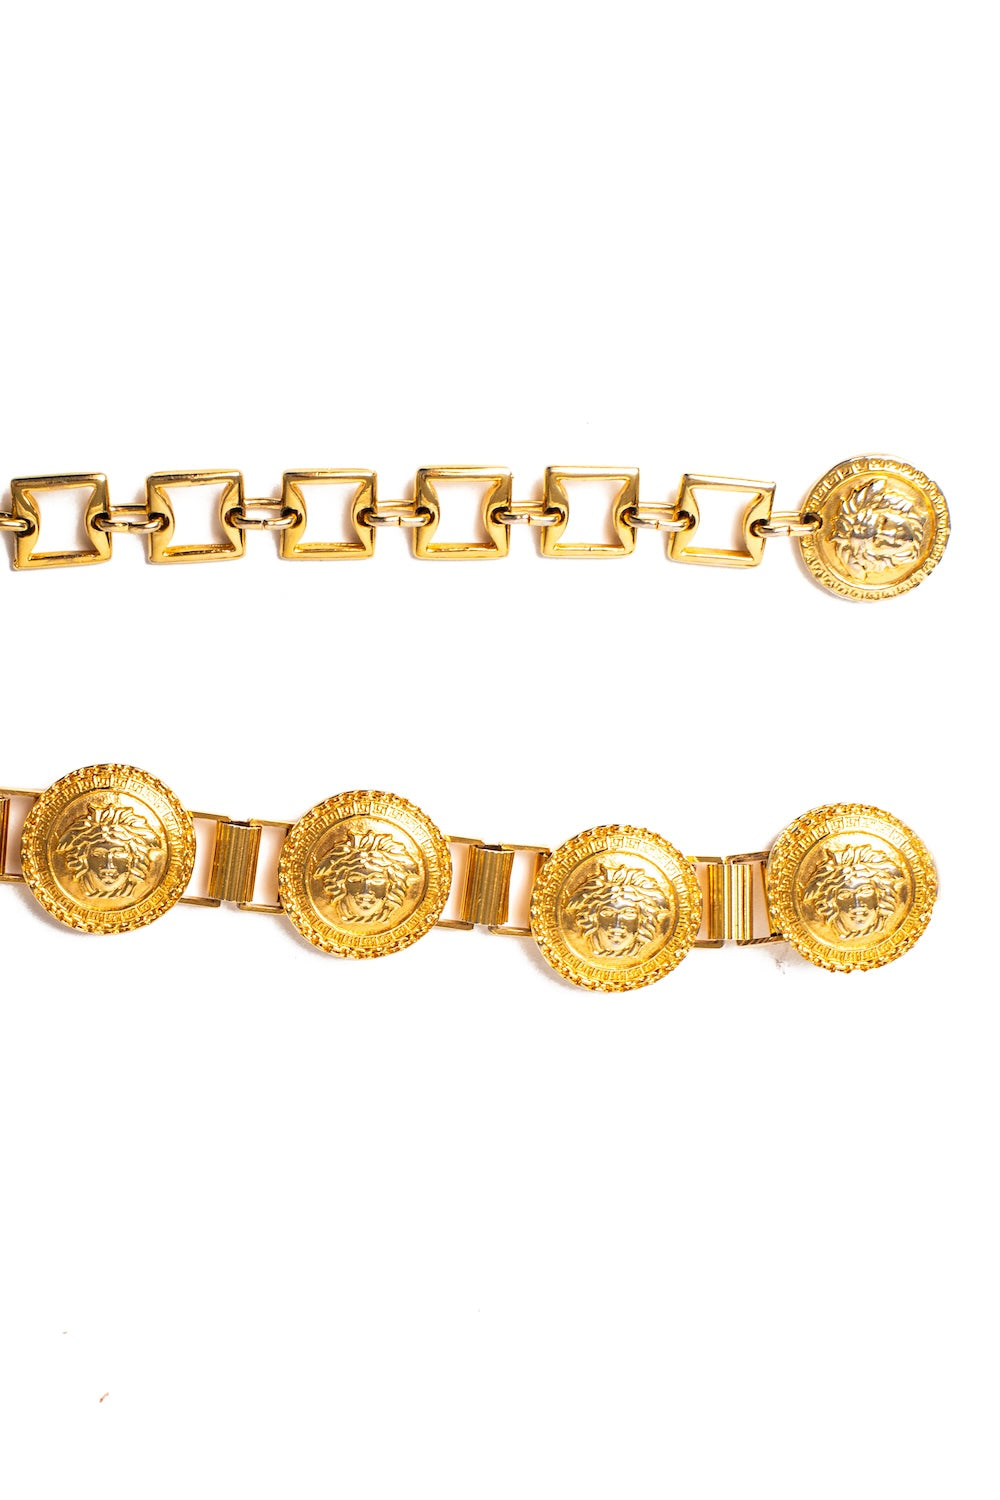 Gianni Versace <br> F/W 1994 Medusa medallion gold chain belt with leather belt bag